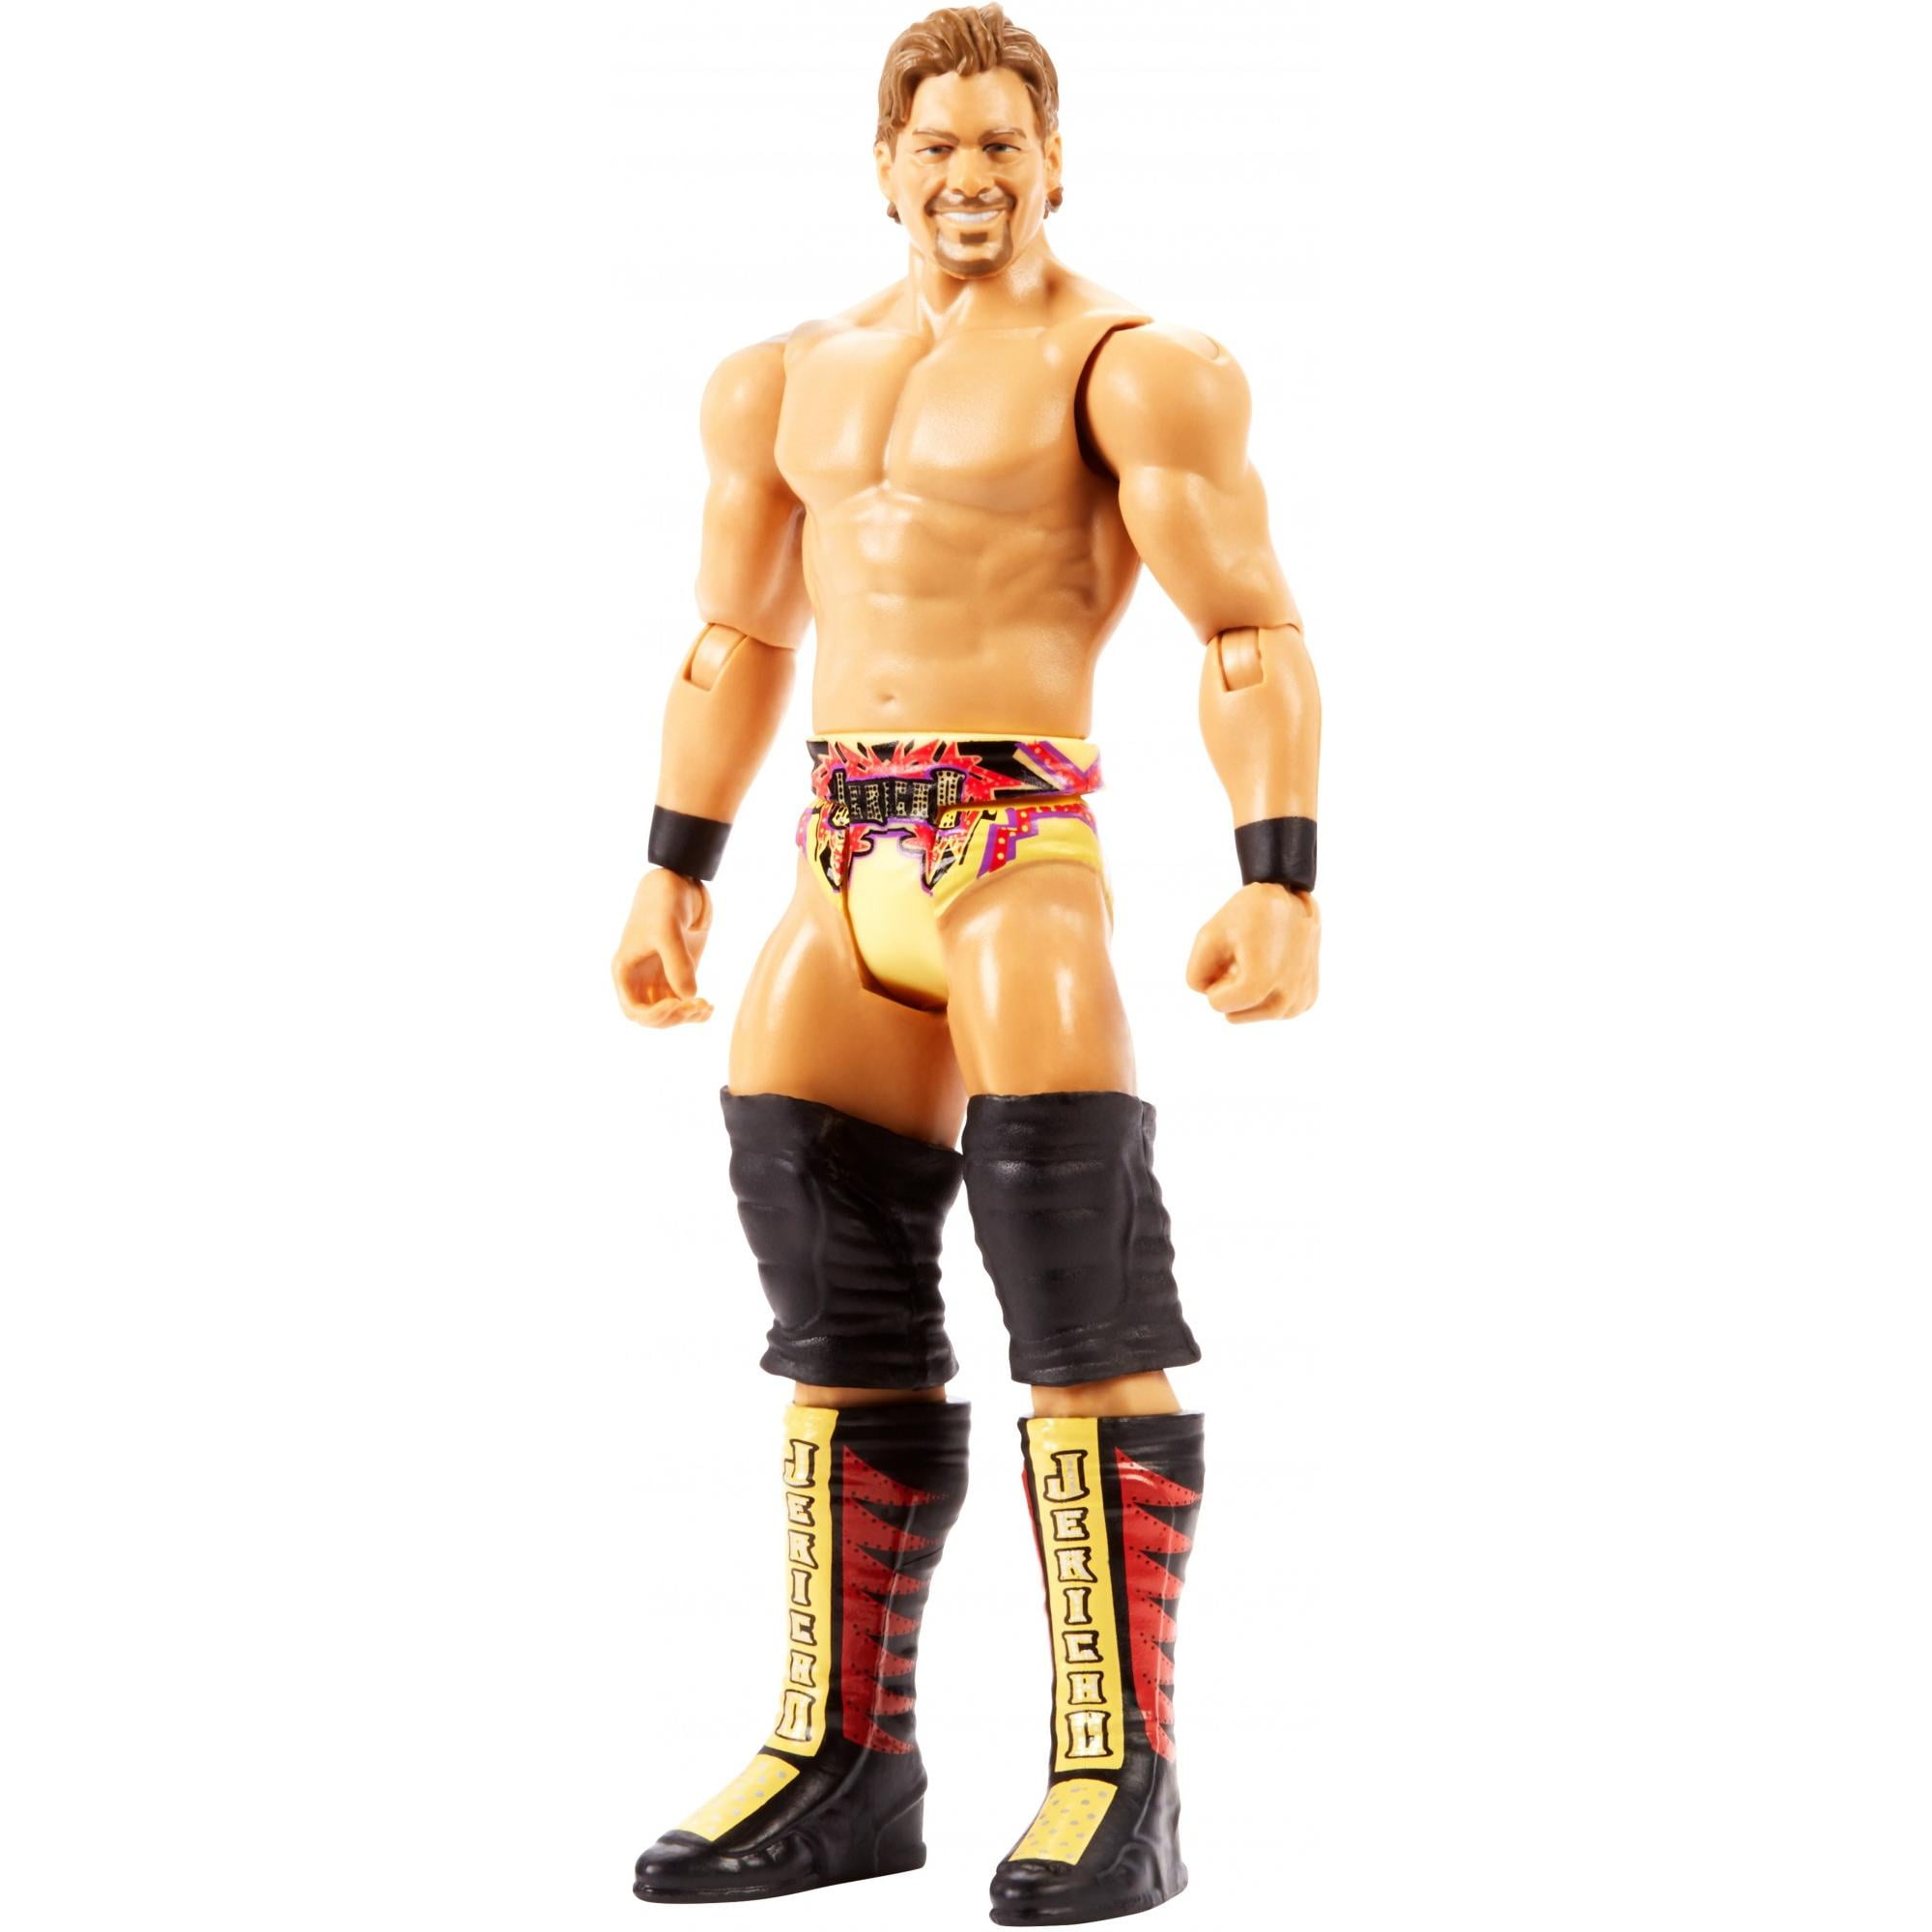 WWE Defining Moments Chris Jericho Wrestling Action Figure Mattel 75jpzc1 Dxj51 for sale online 